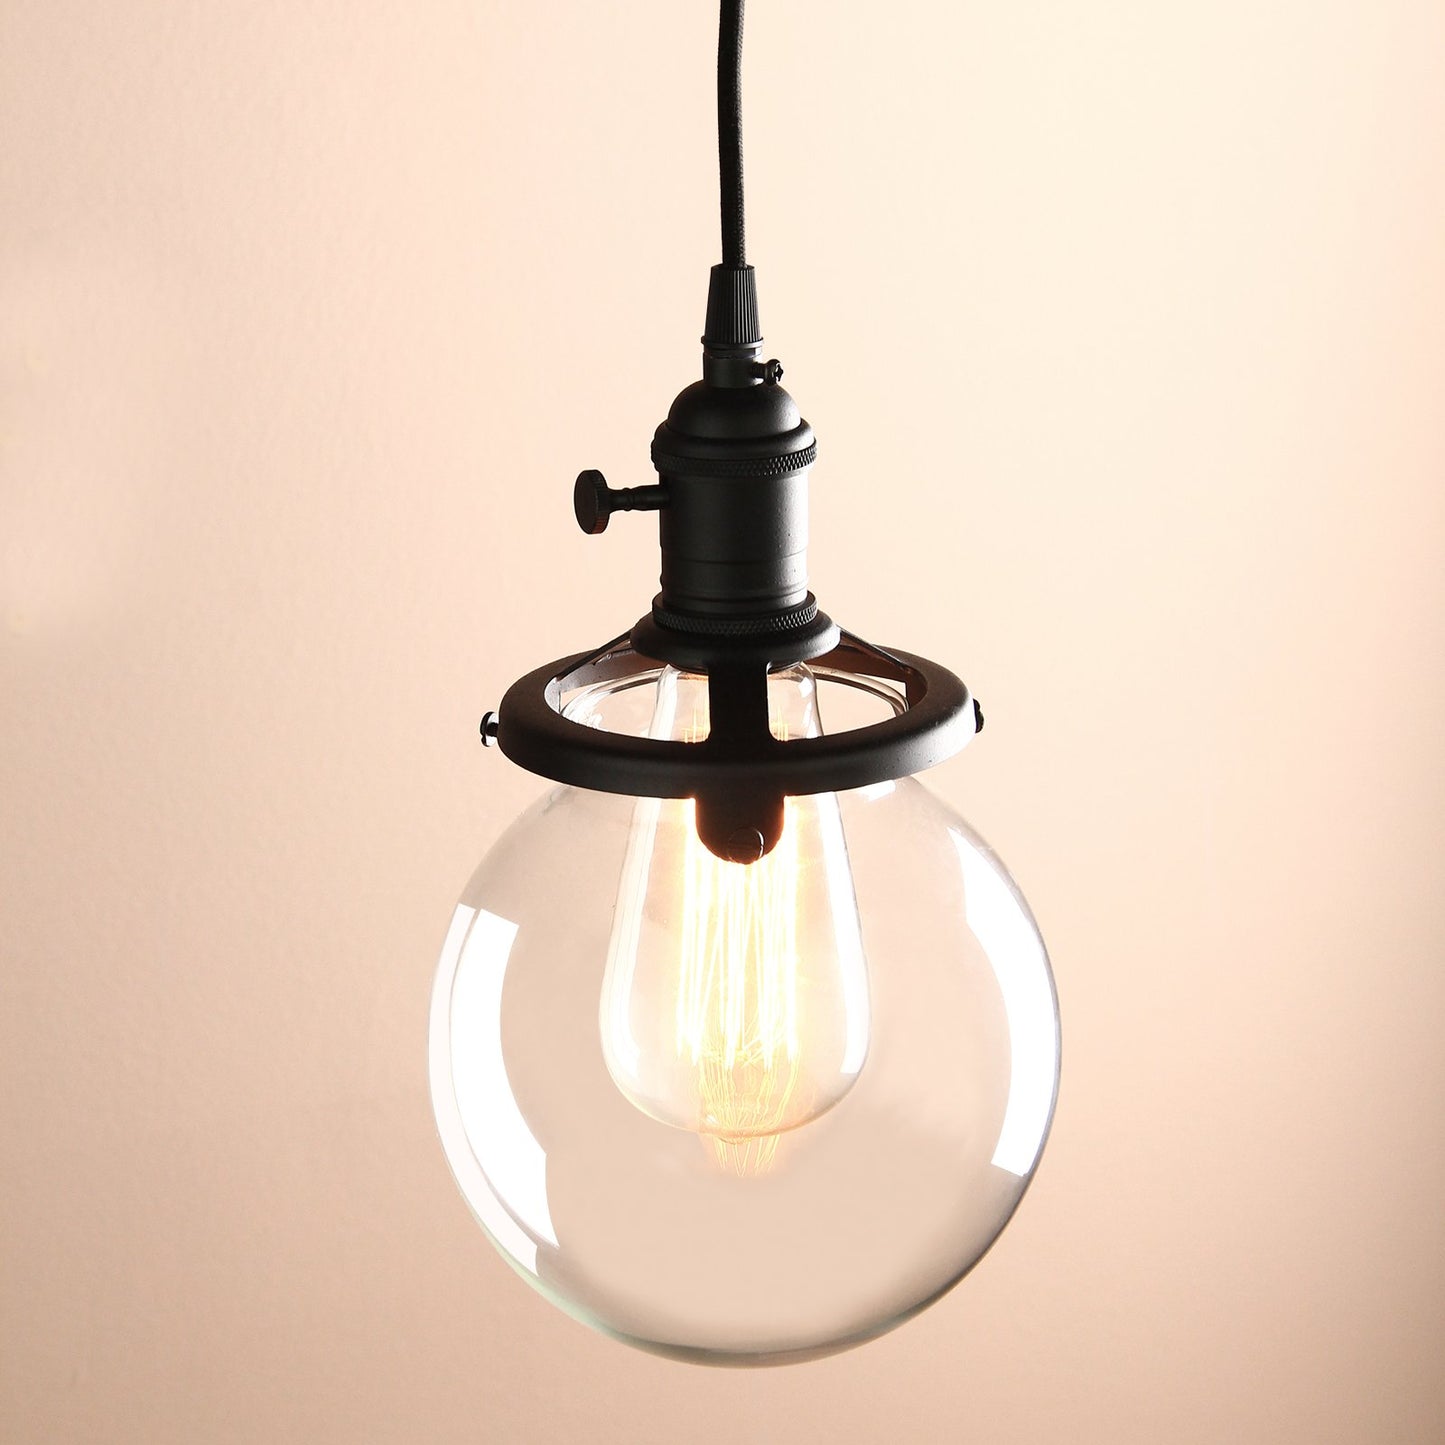 Vintage Industrial Pendant Light Fixture